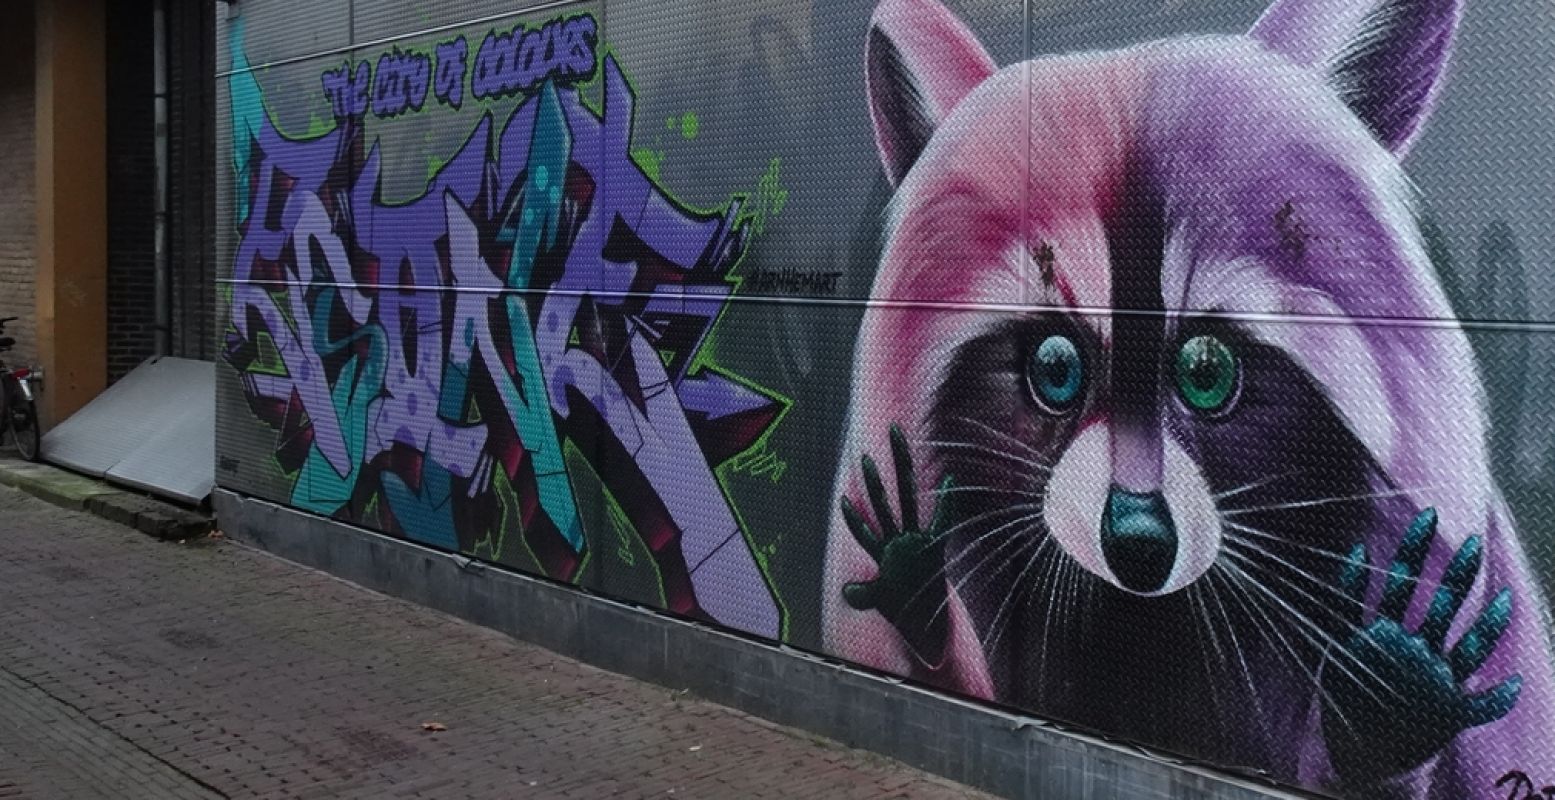 Urban stedentrip! Ontdek de mooiste street art in deze 7 steden